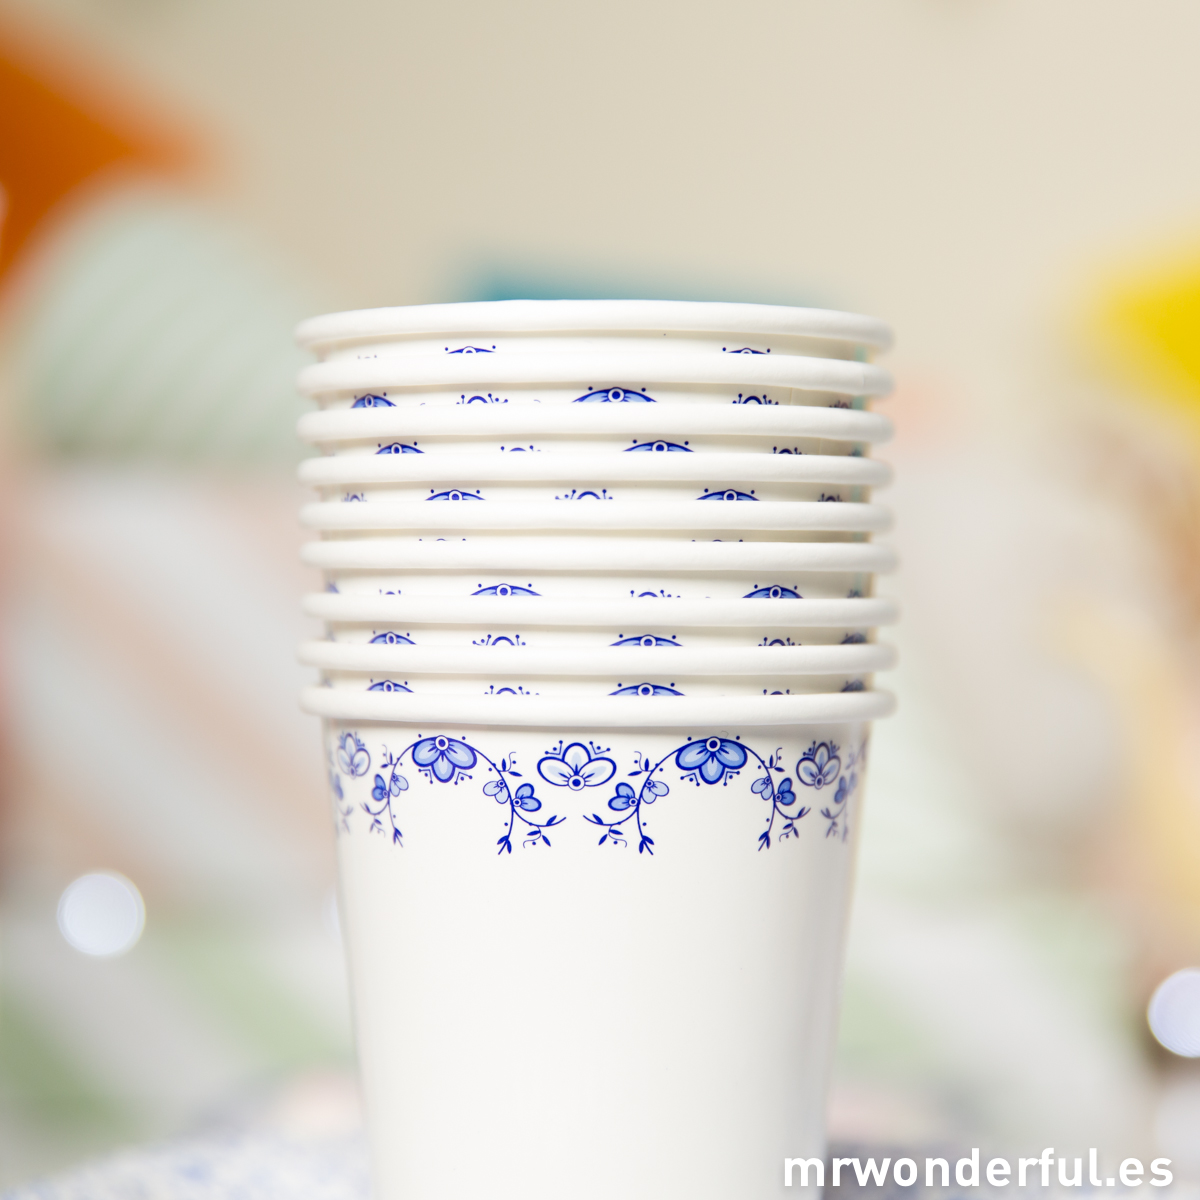 mrwonderful_PPB-CUP-vasos-papel-estampado-porcelana-9